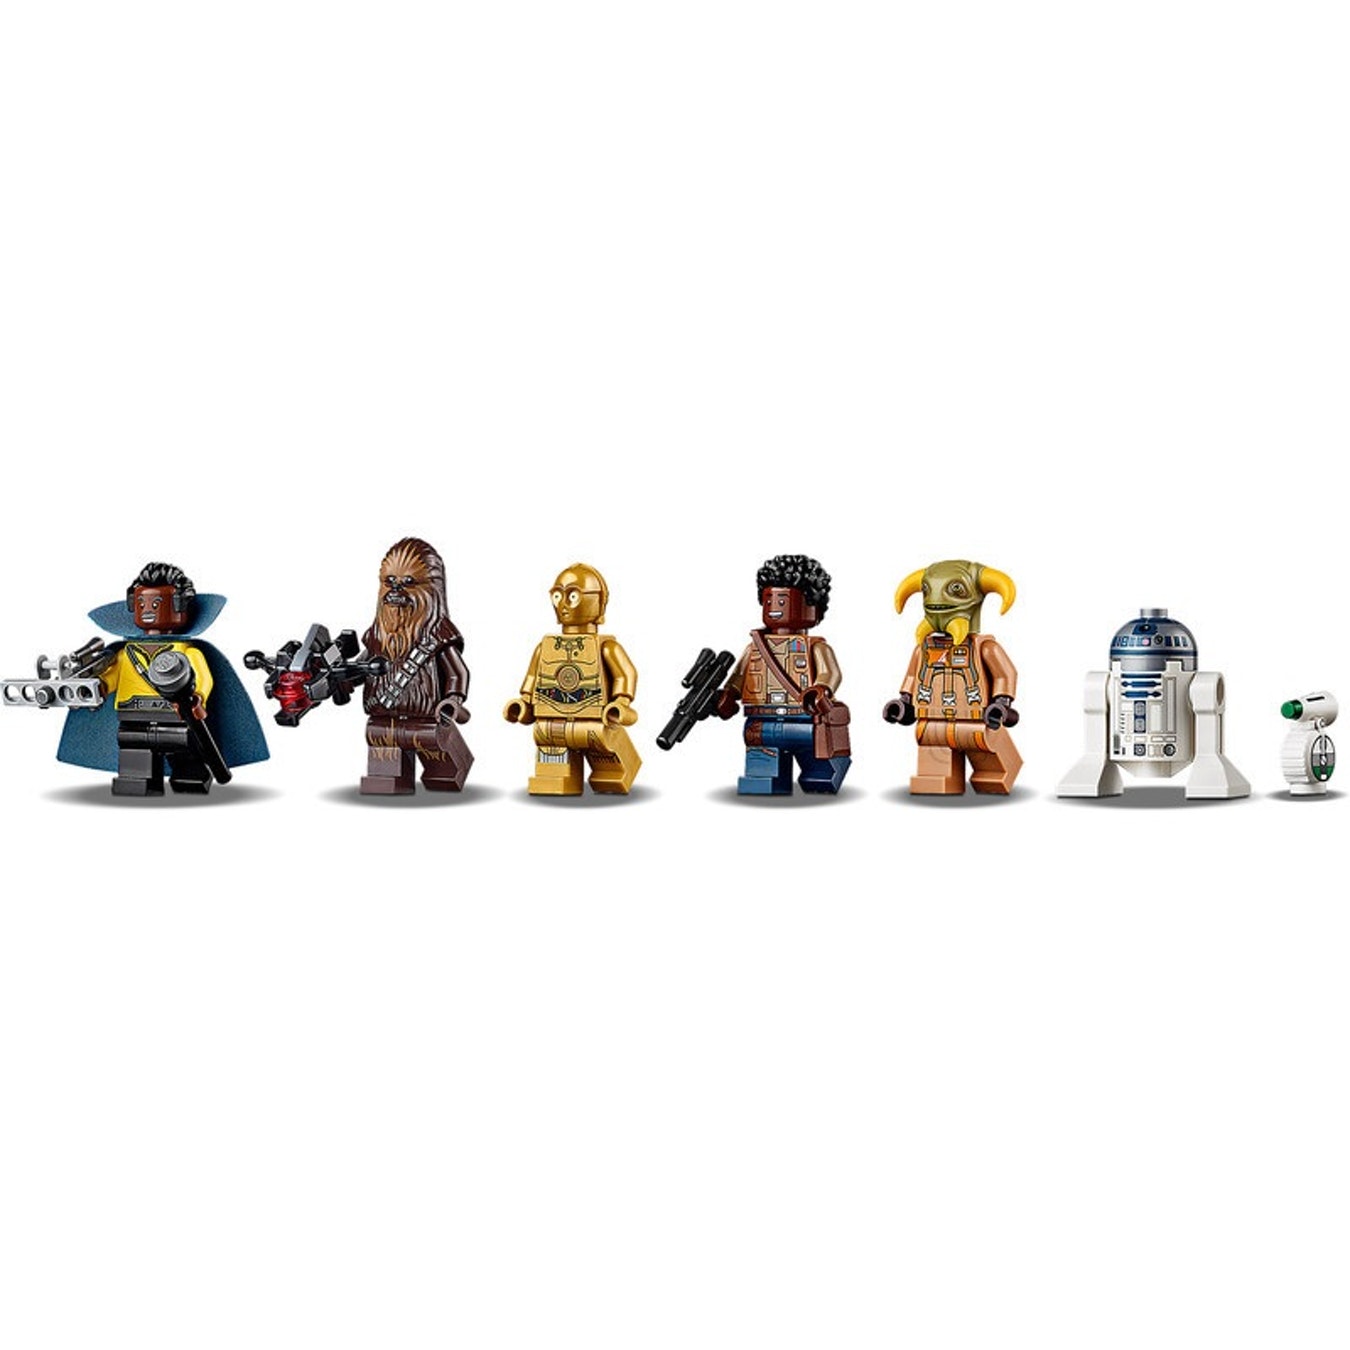 LEGO Star Wars - Tusindårsfalken (75257)